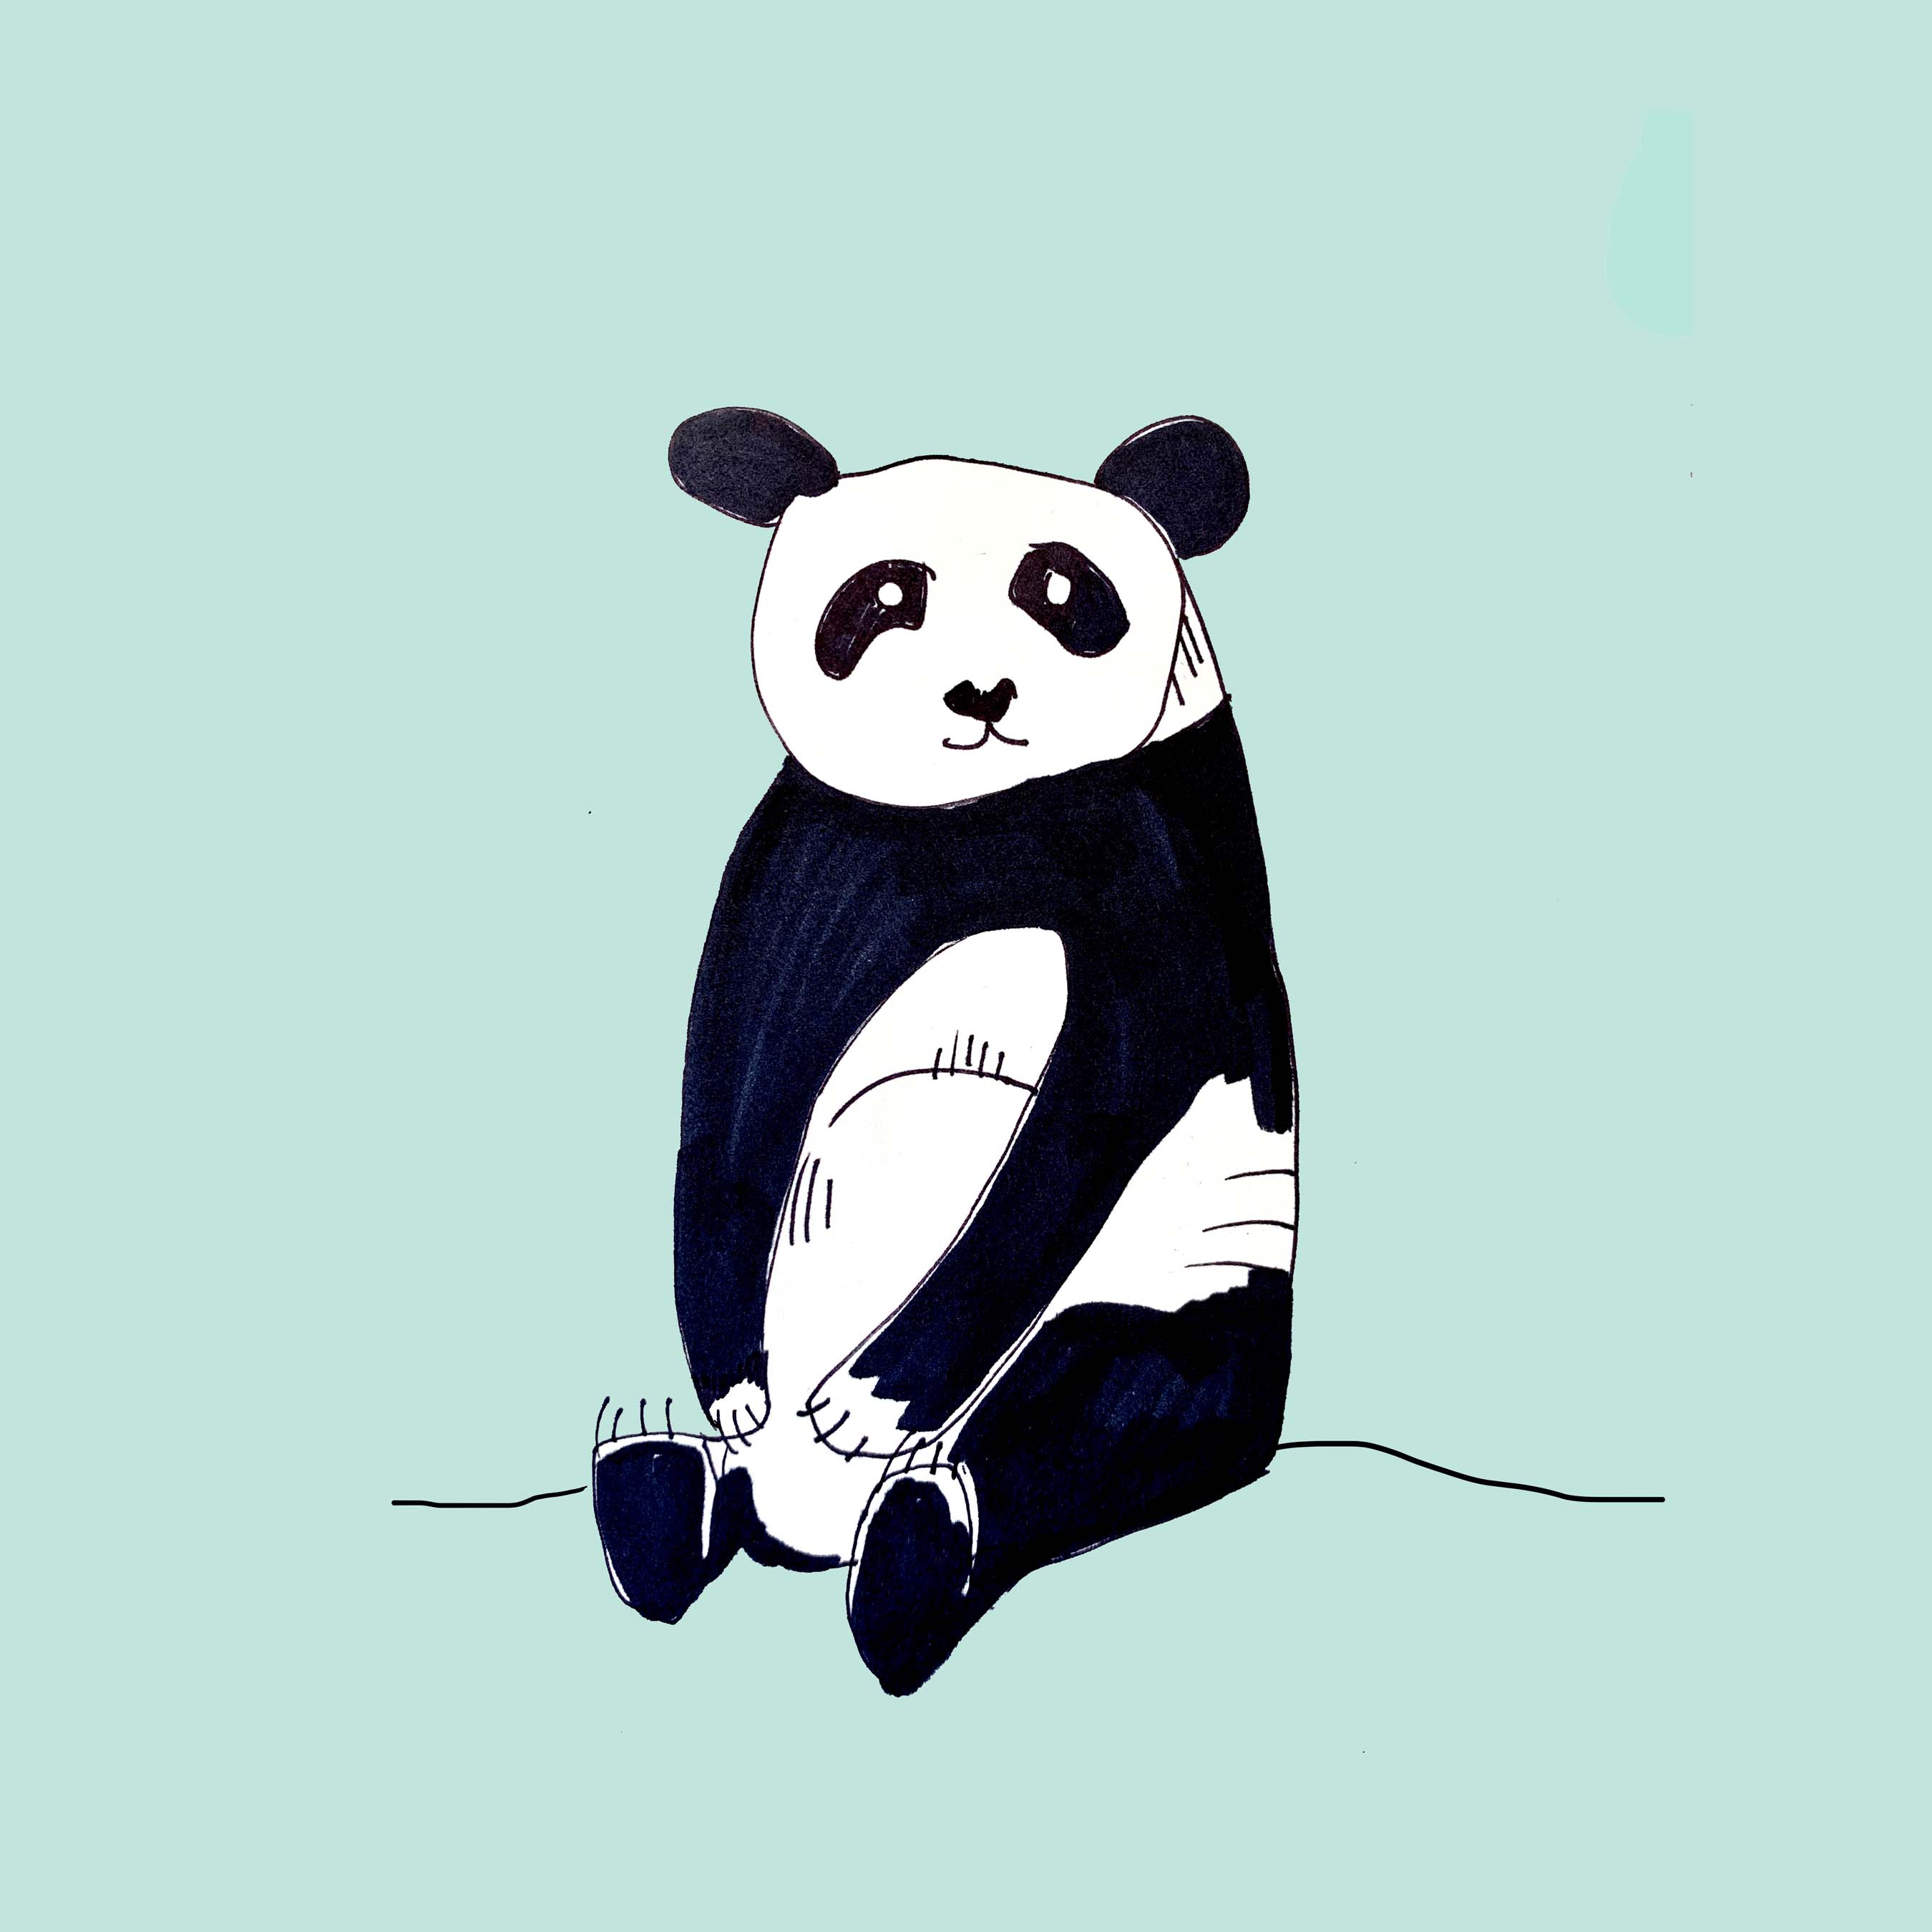 art every day number 621 panda bear illustration drawing